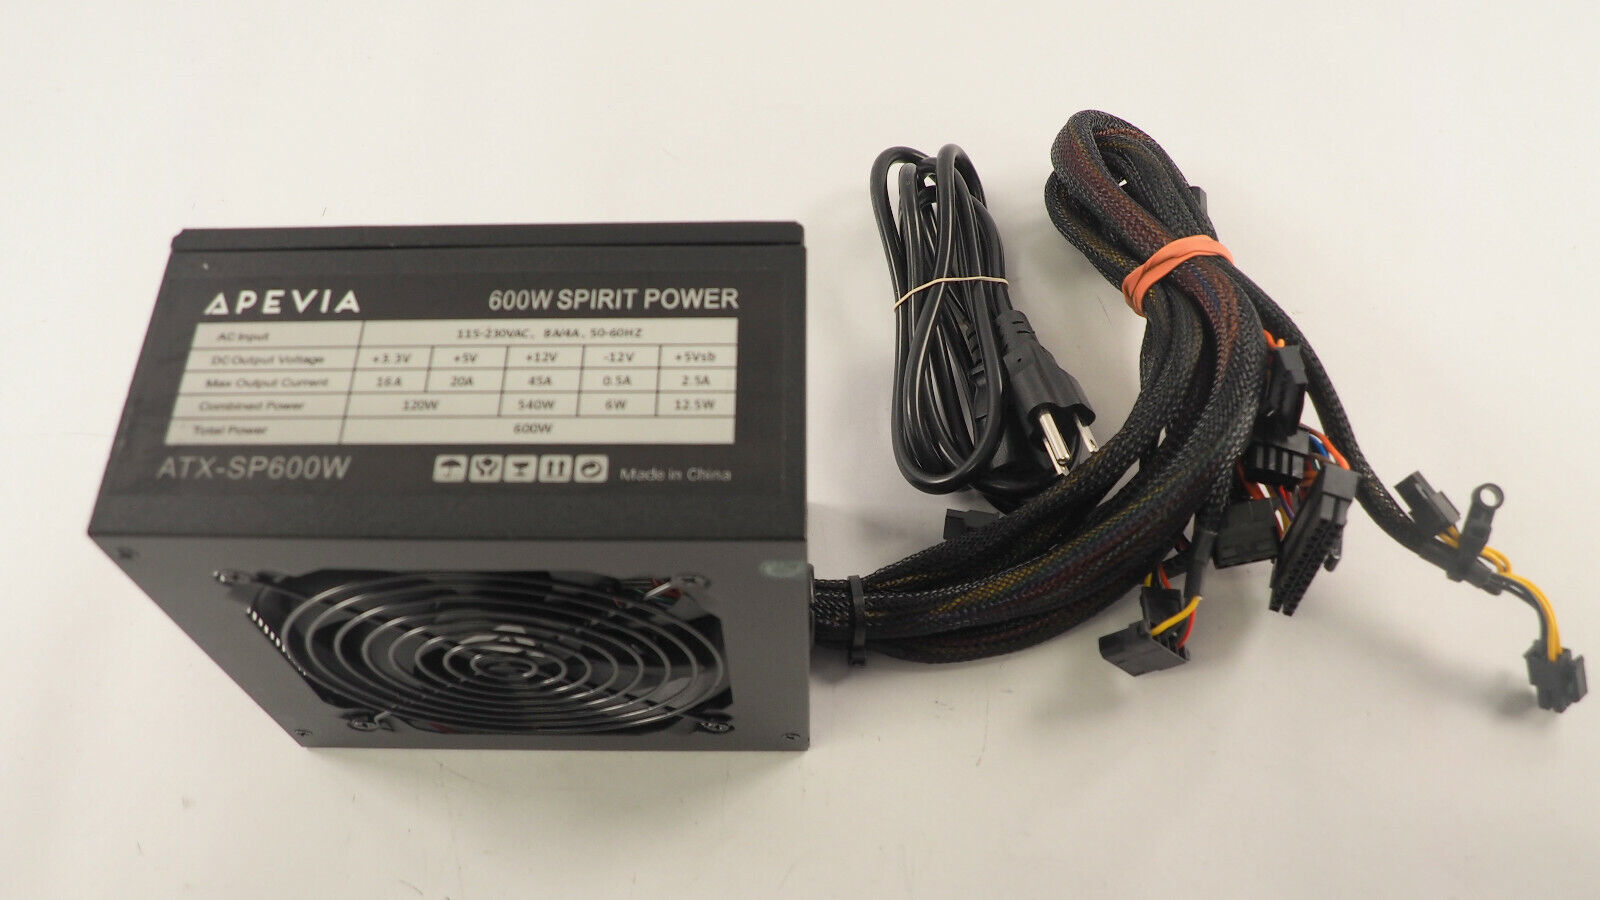 Apevia Spirit Power Series  ATX-SP600W Power Supply